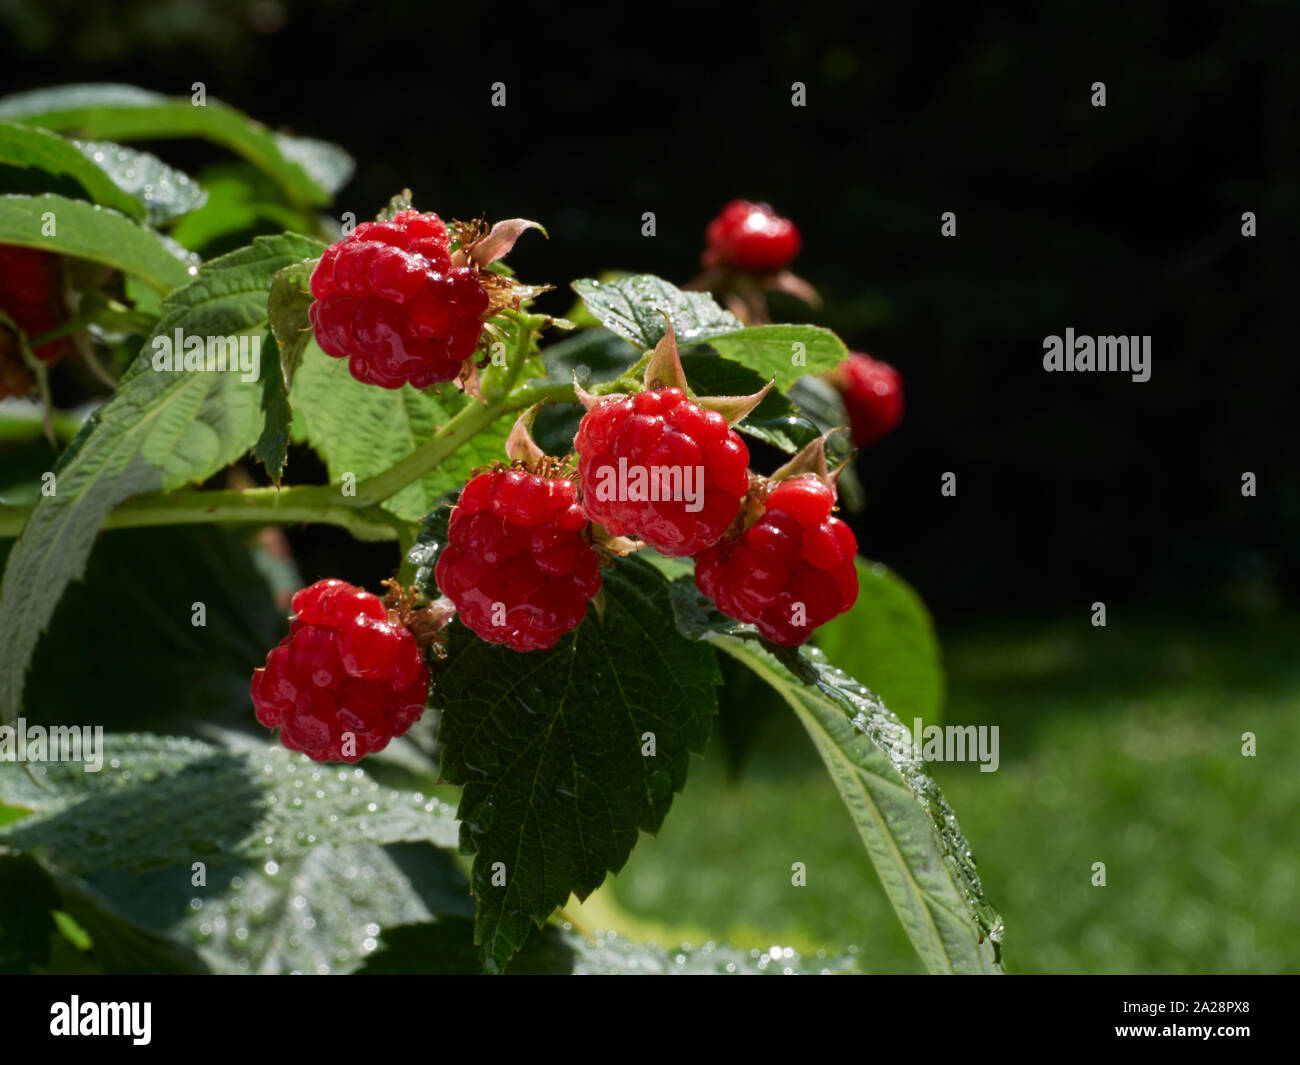 A cluster of heritage, heirloom, organic raspberries in a garden. Stock Photo